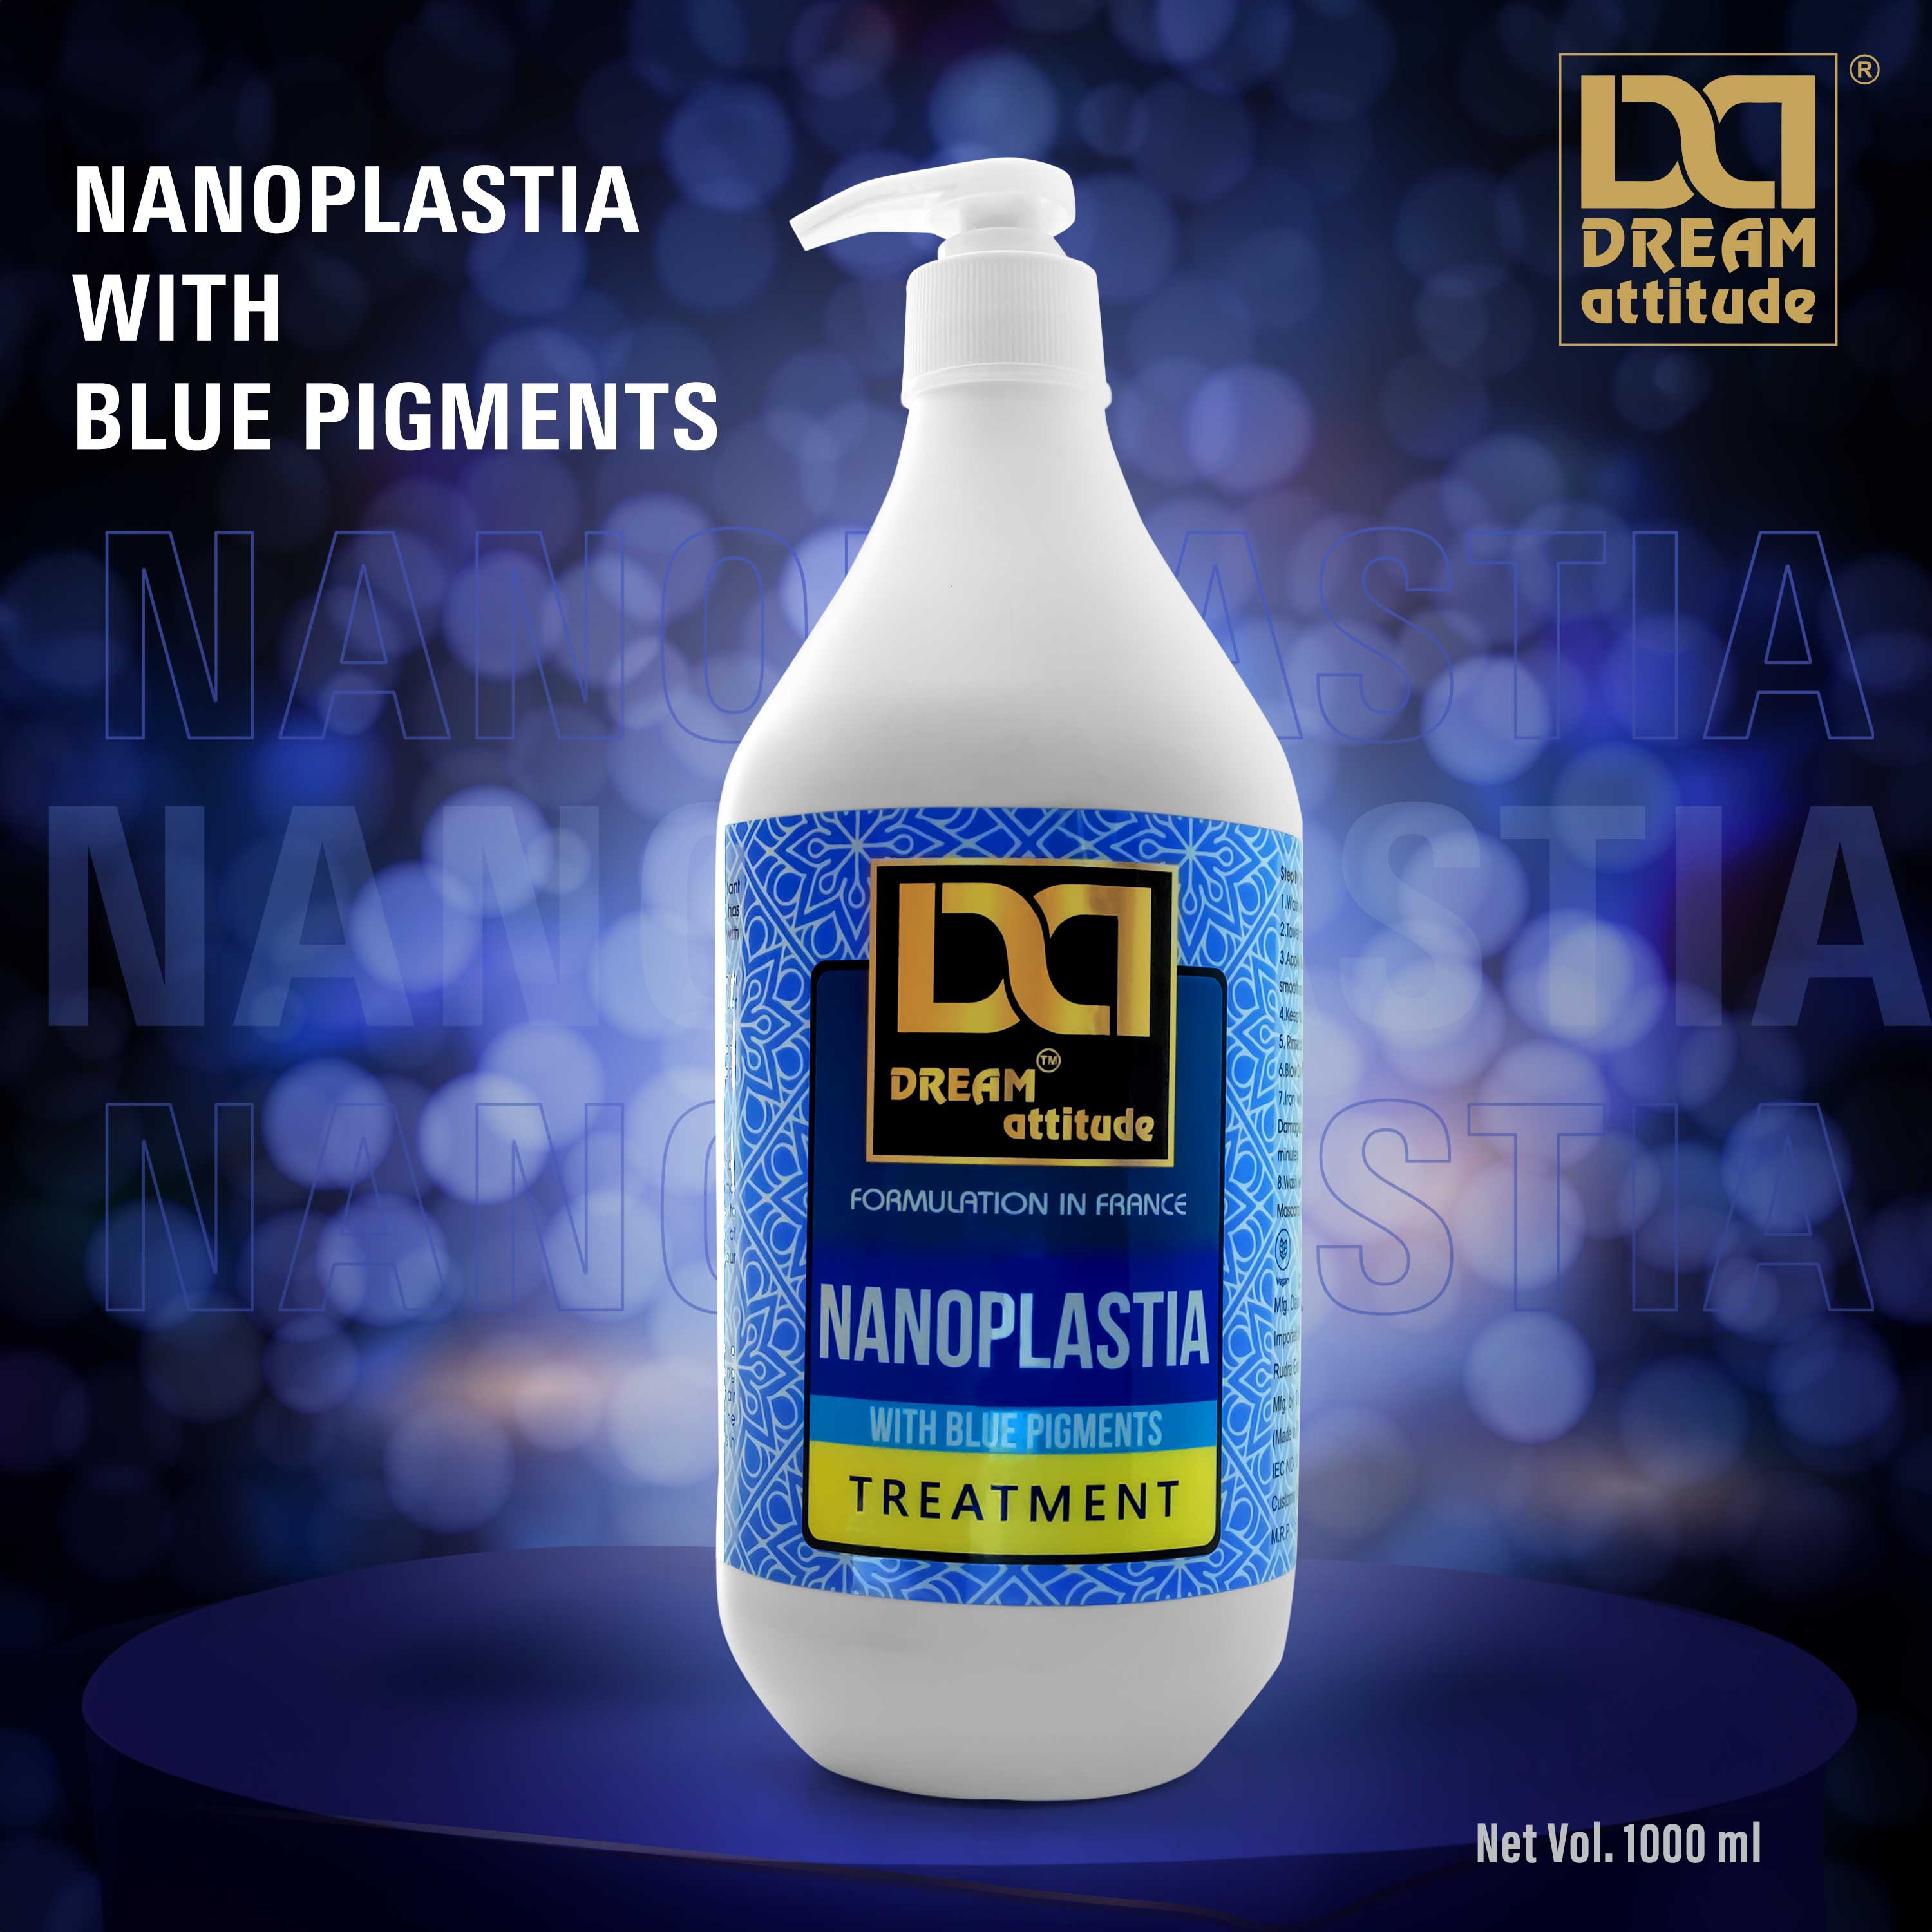 Dream Attitude Nanoplastia Treatment - Cutting-Edge Hair Transformation with Blue Pigments [1000ml]